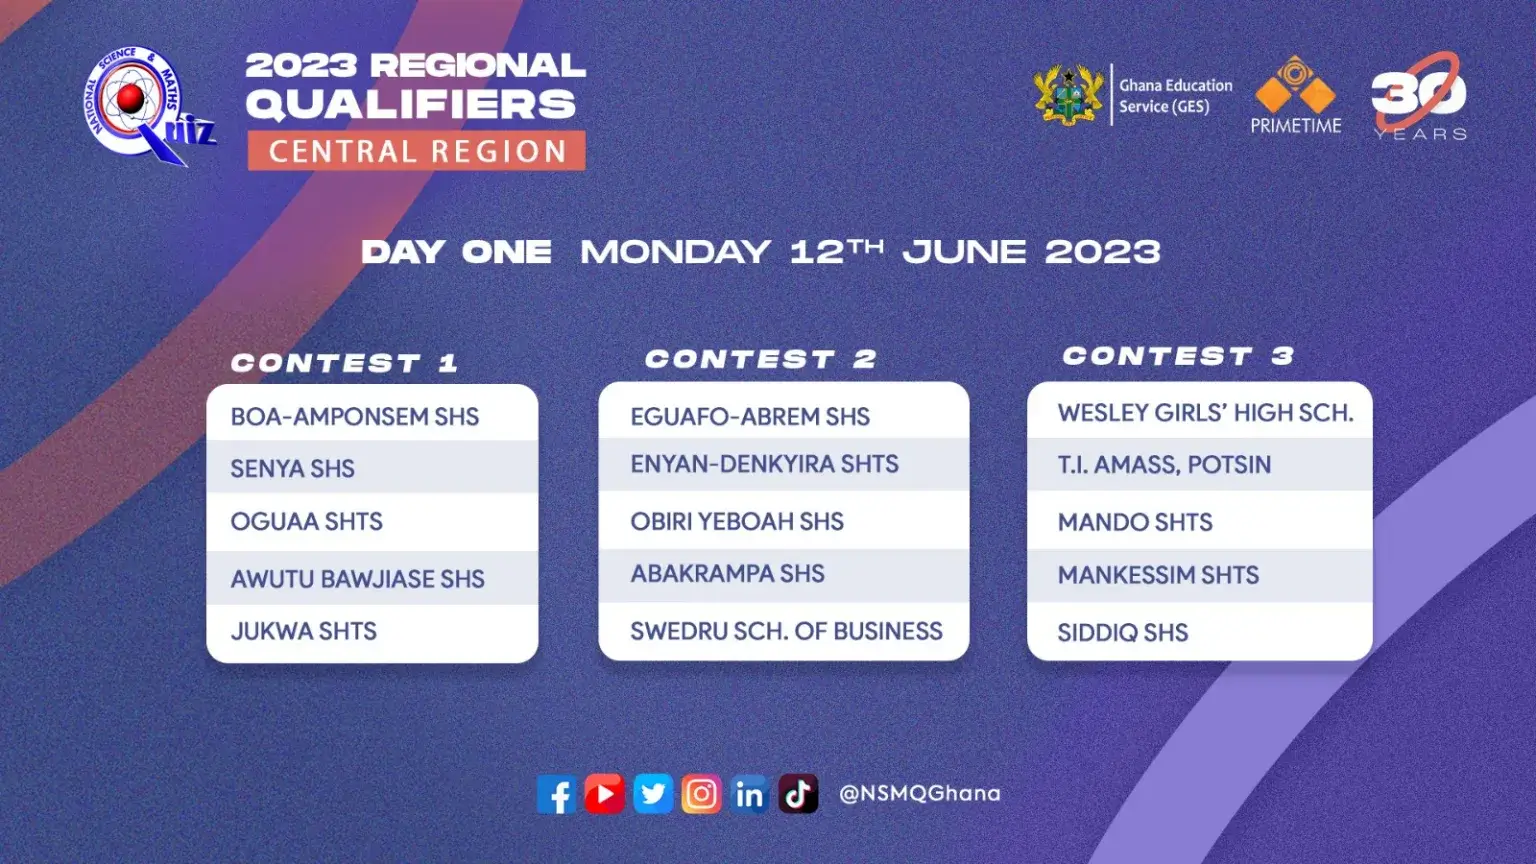 Schedule for Central region